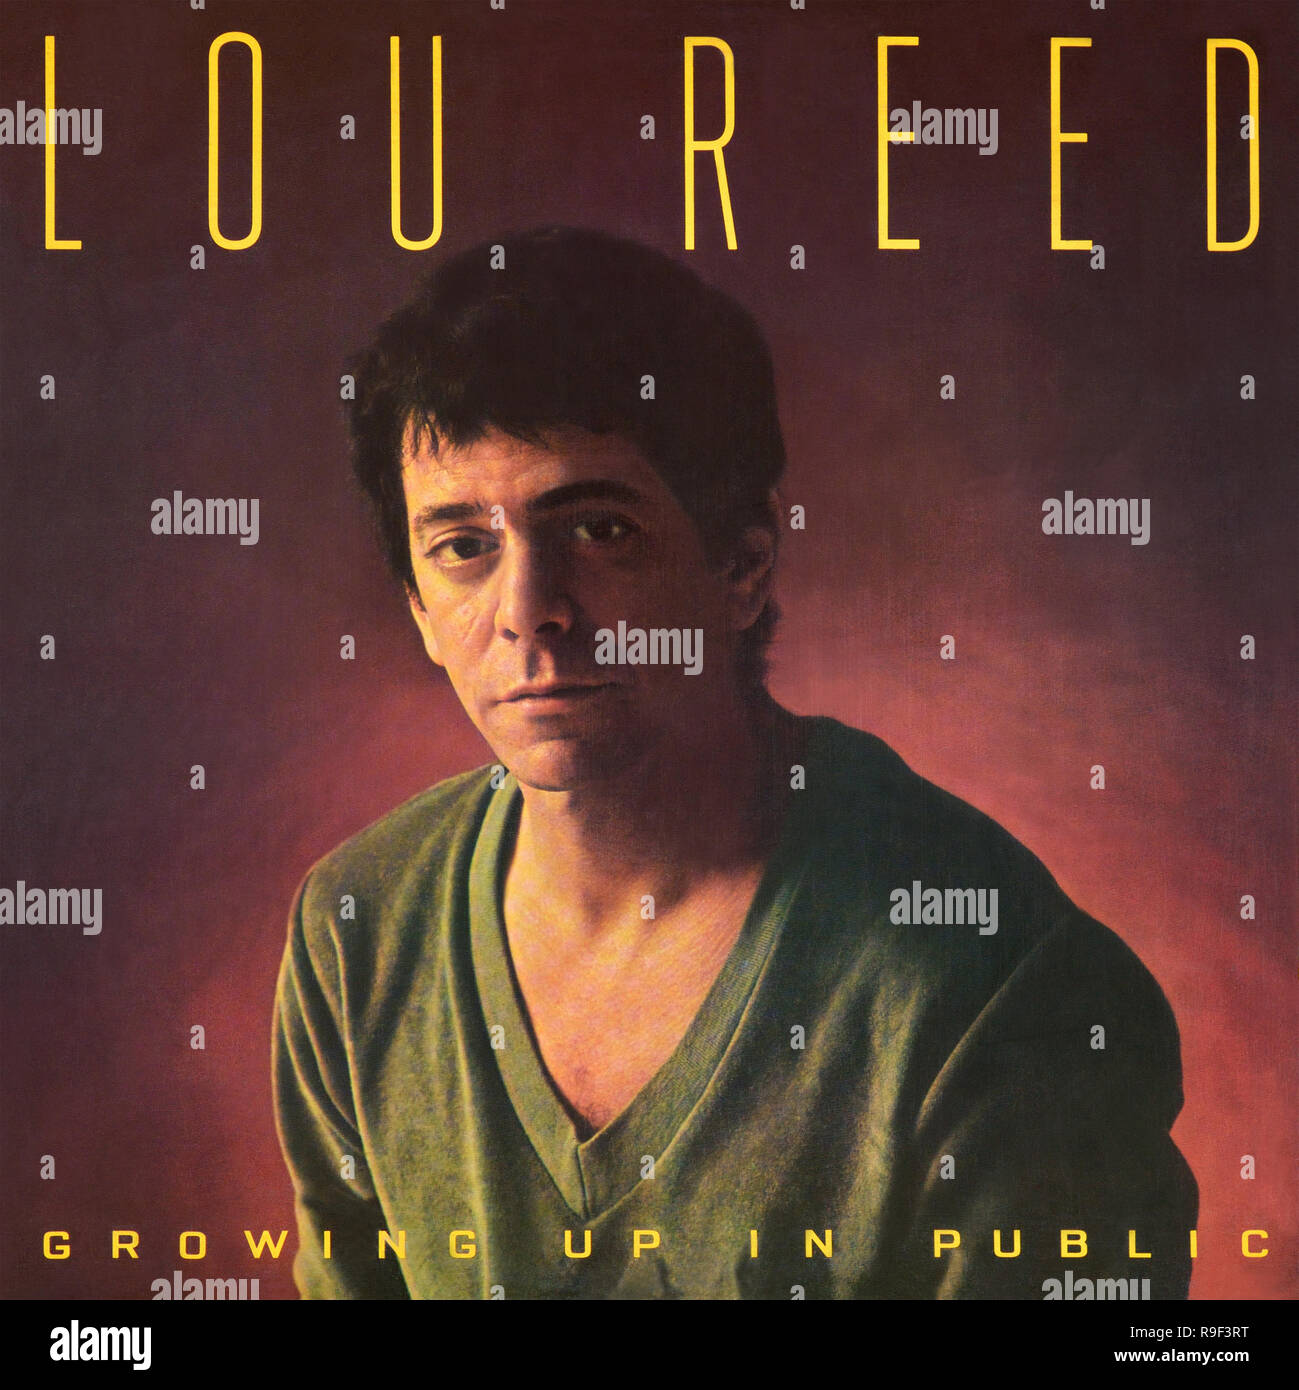 Lou Reed - original vinyl album cover -  Growing up in public - 1980 Stock Photo